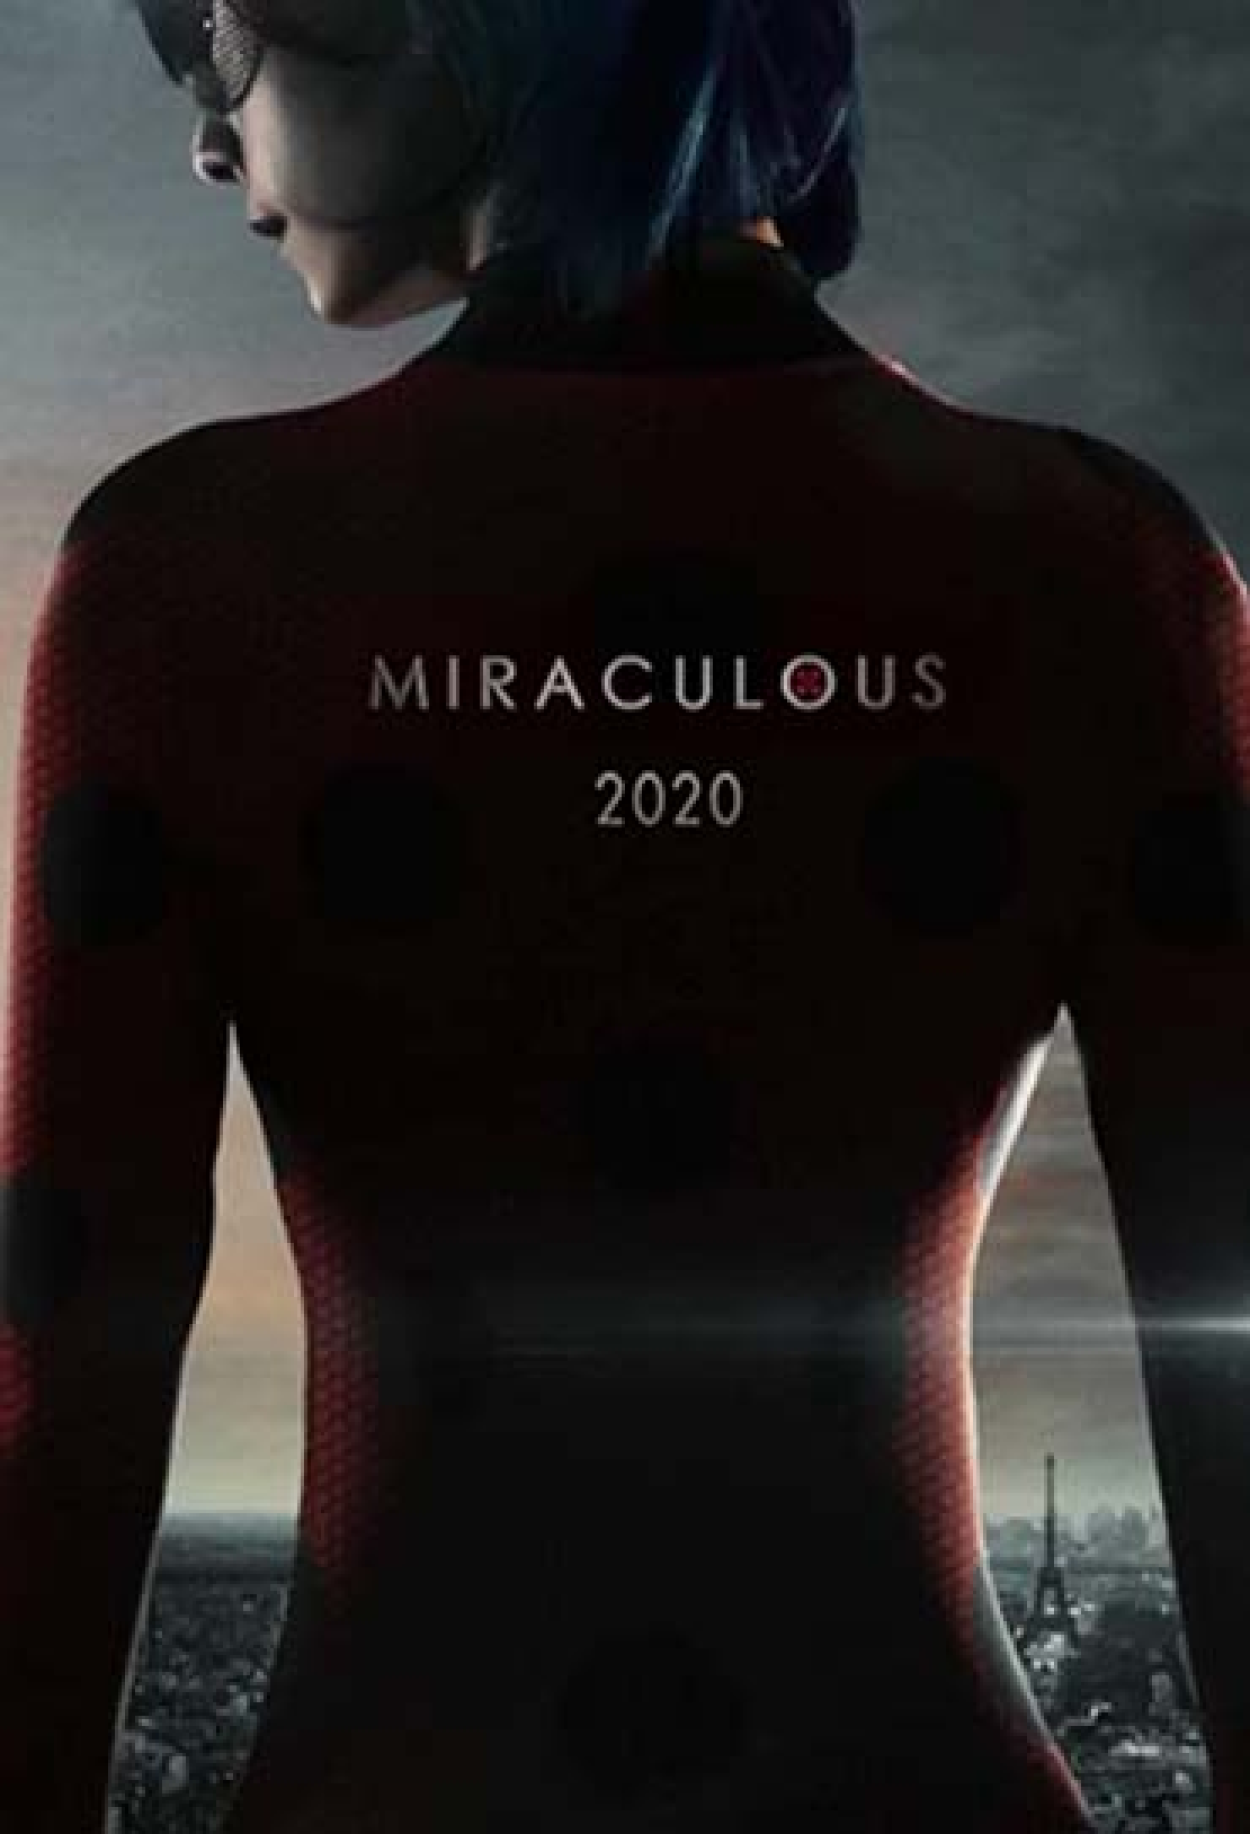 Miraculous (Filme), Trailer, Sinopse e Curiosidades - Cinema10